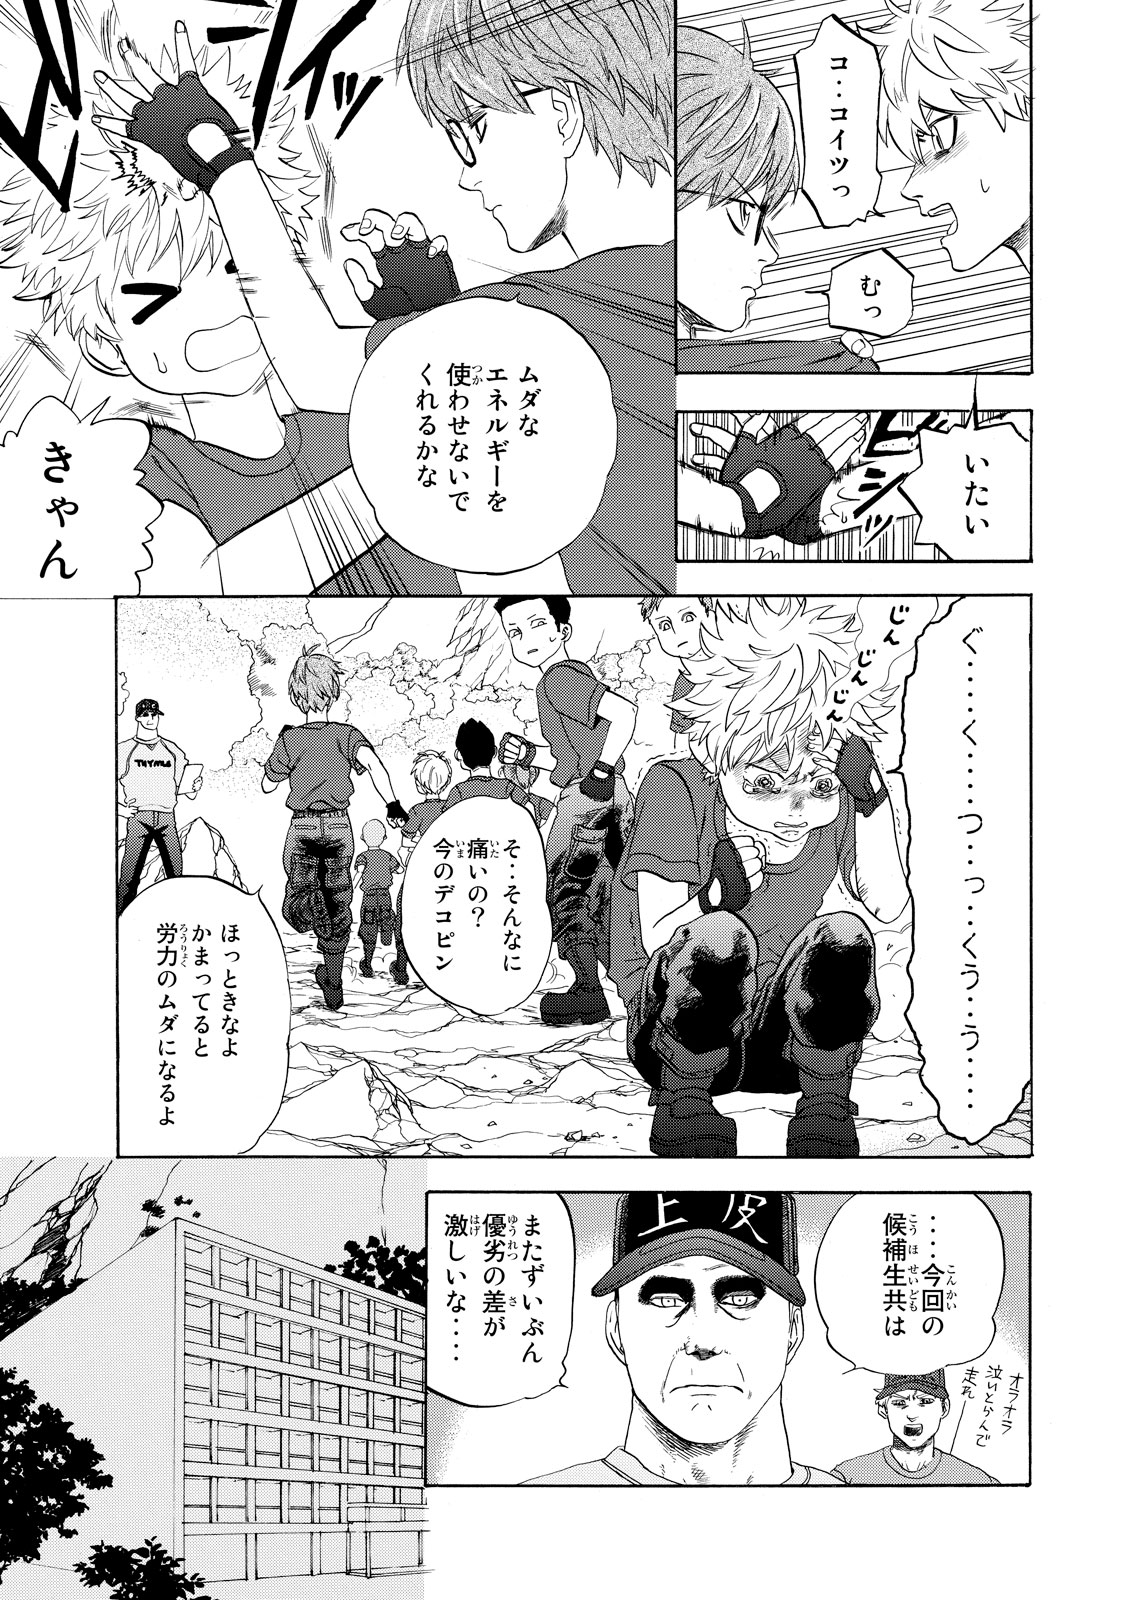 Hataraku Saibou - Chapter 12 - Page 11